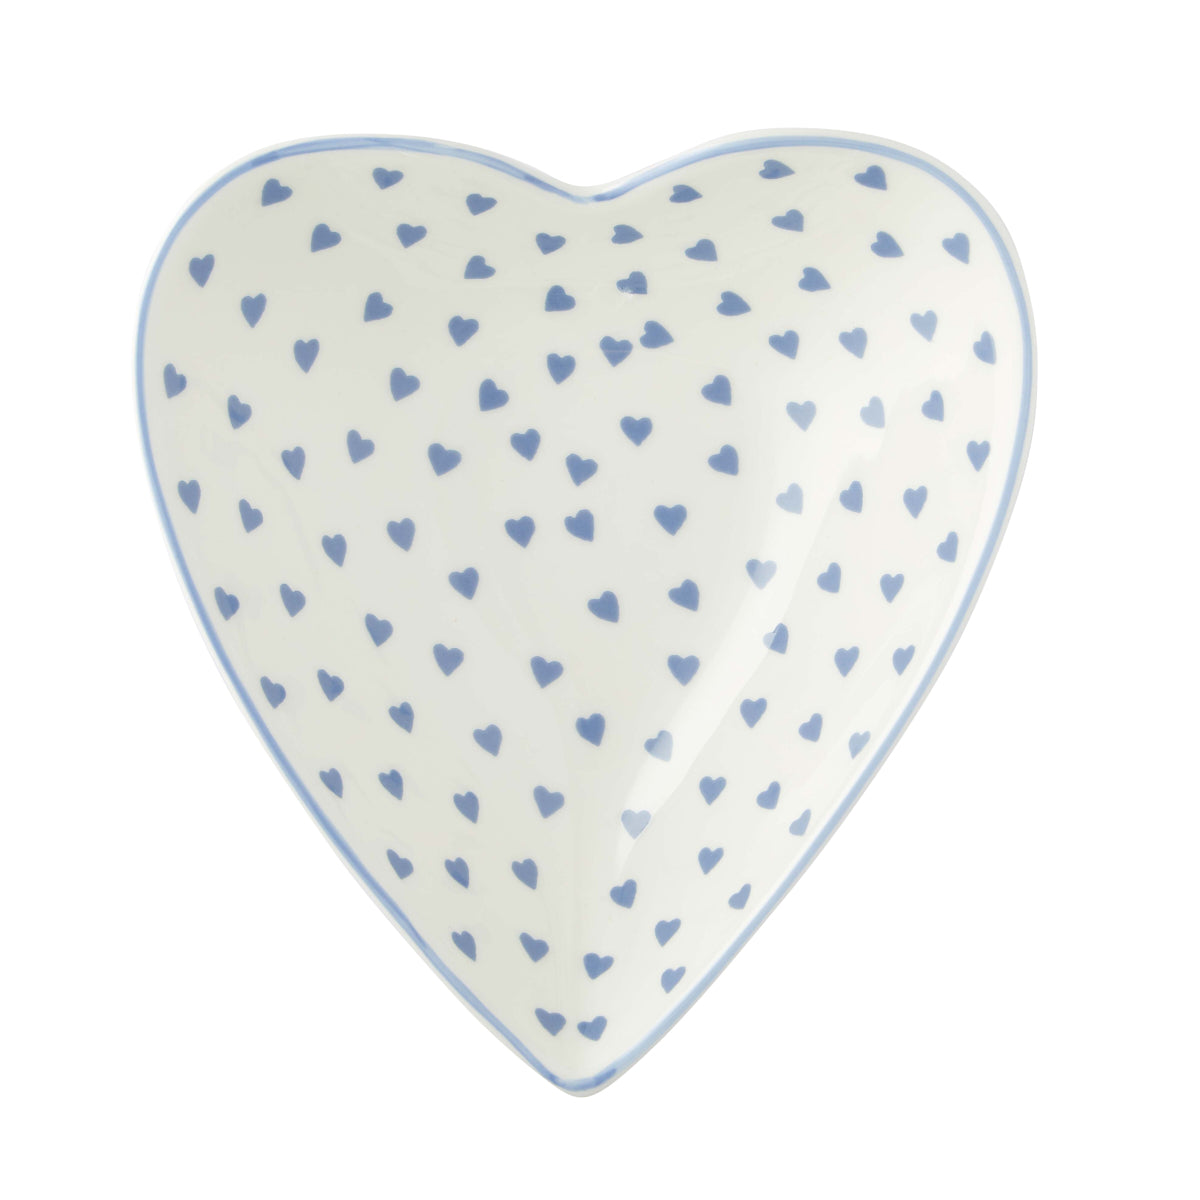 Medium Heart Dish   - Blue Heart